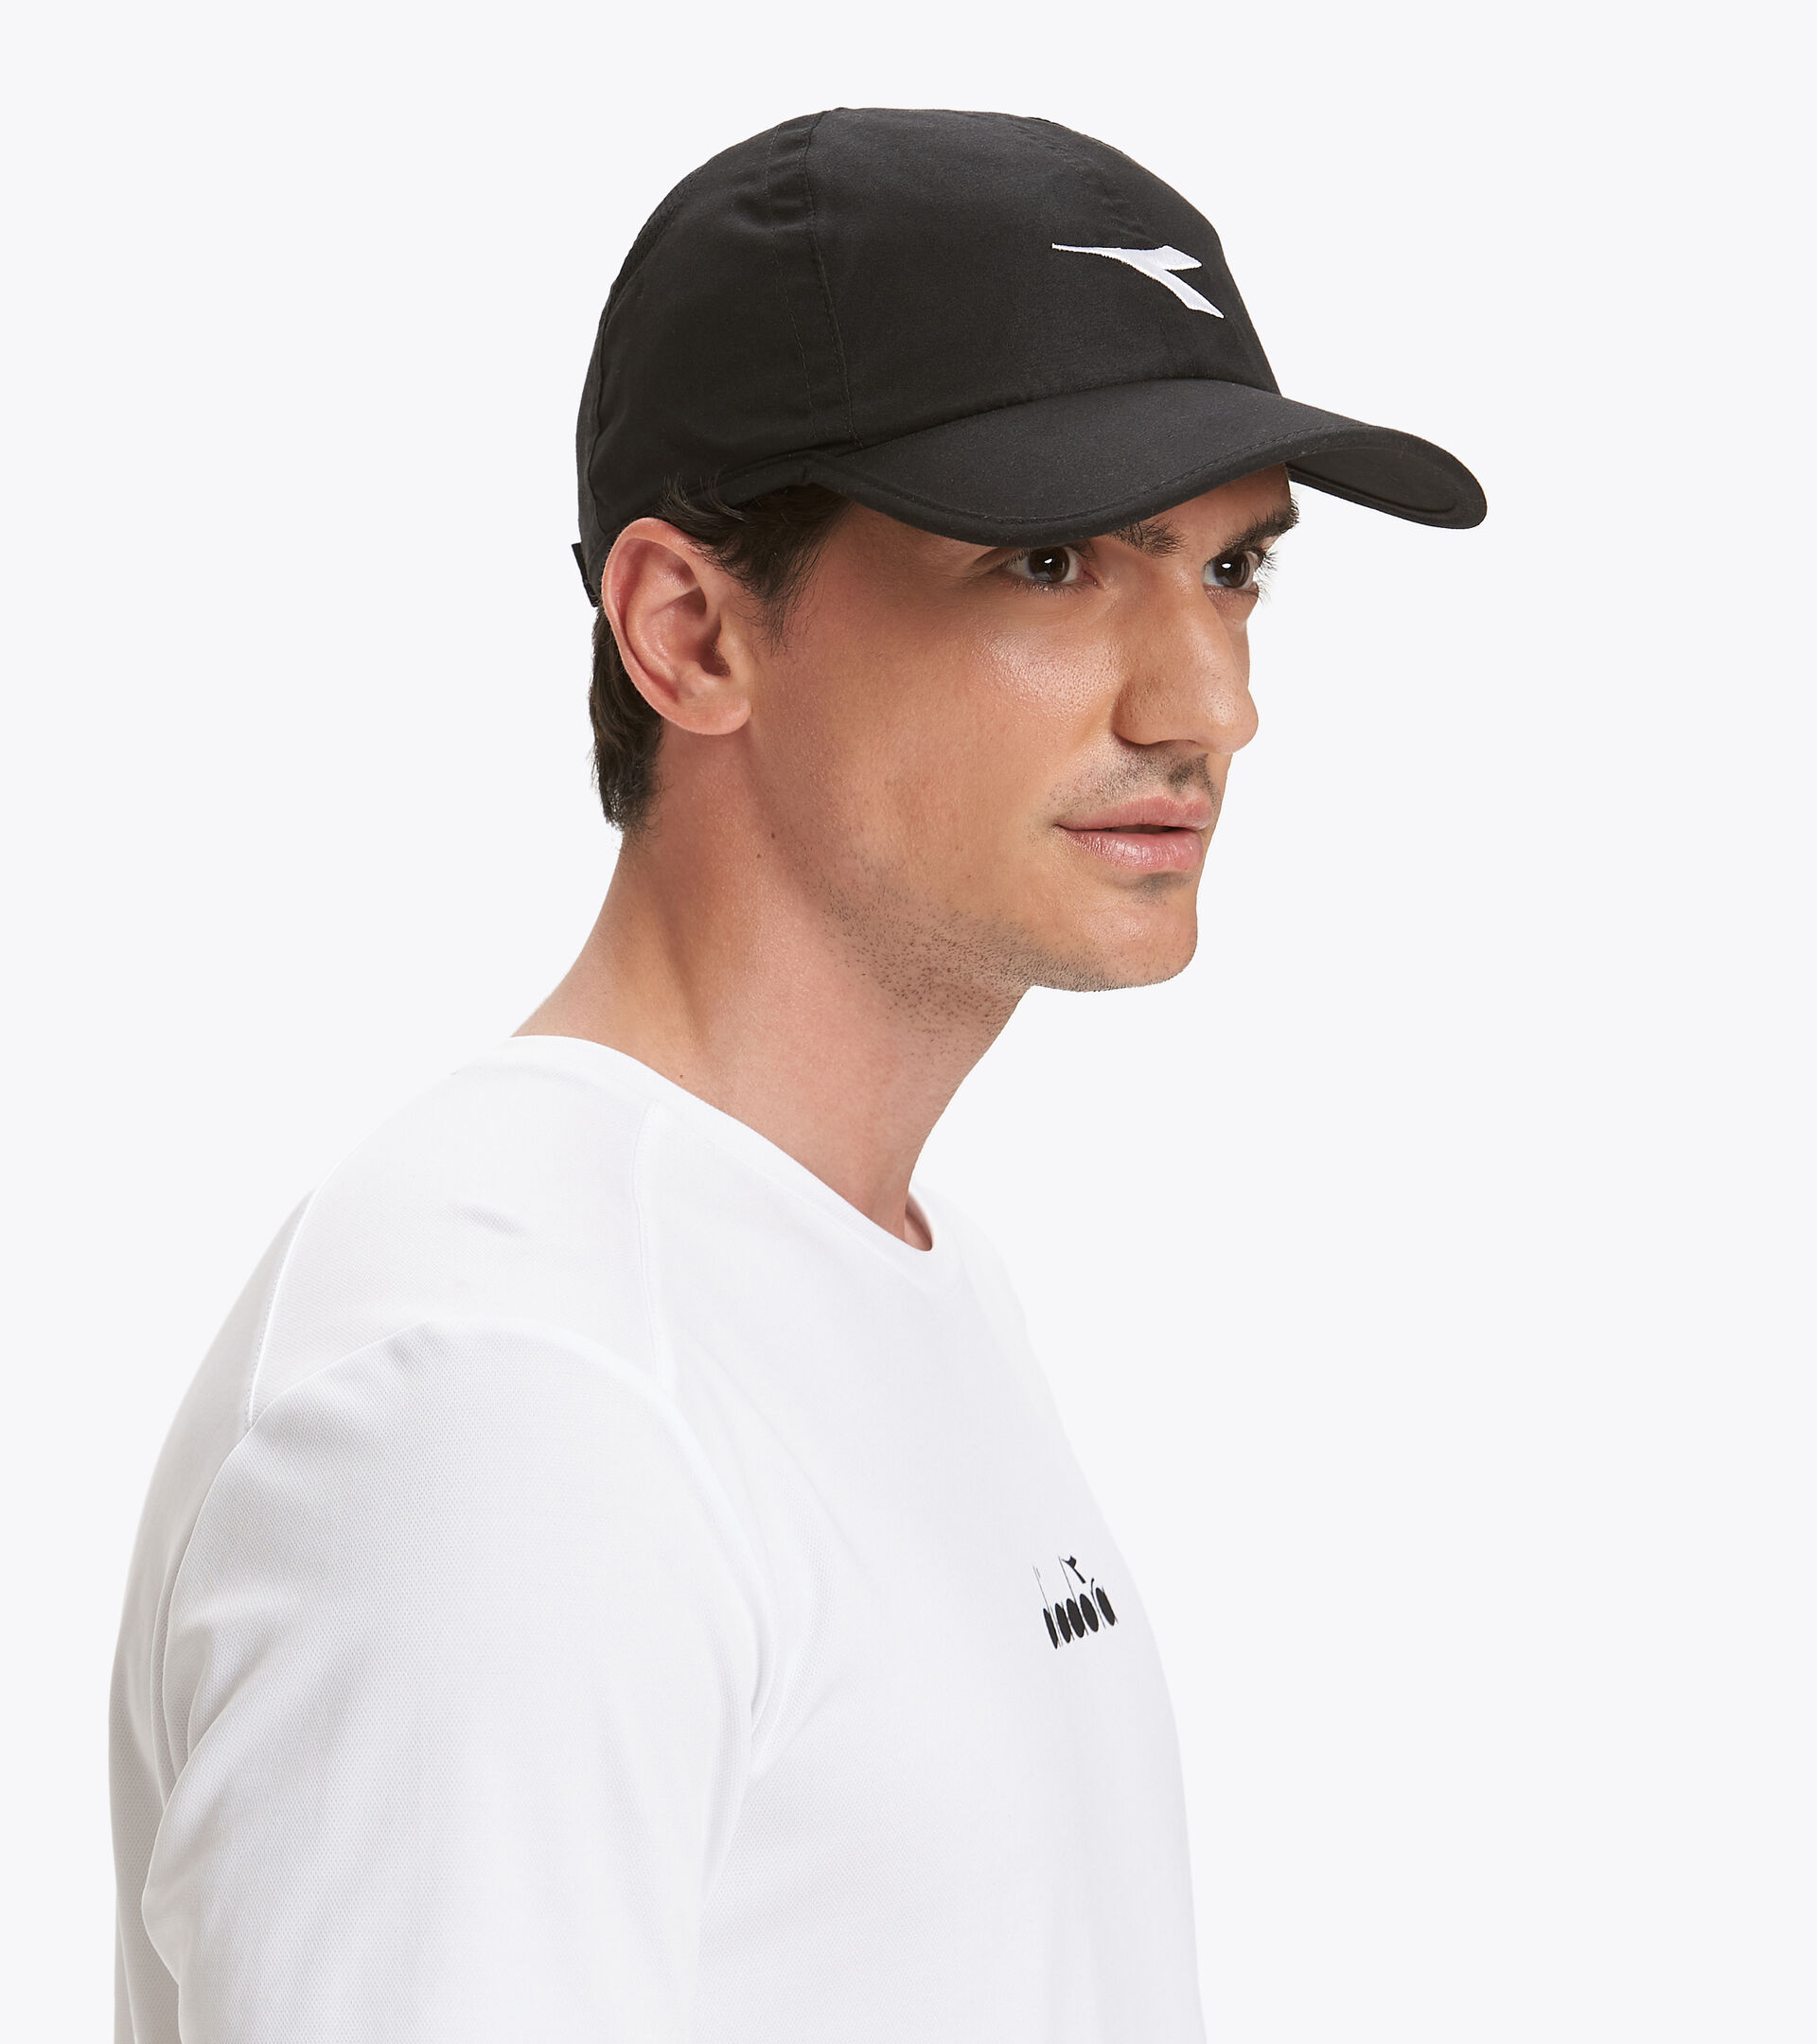 Tennis-style hat ADJUSTABLE CAP BLACK/OPTICAL WHITE - Diadora